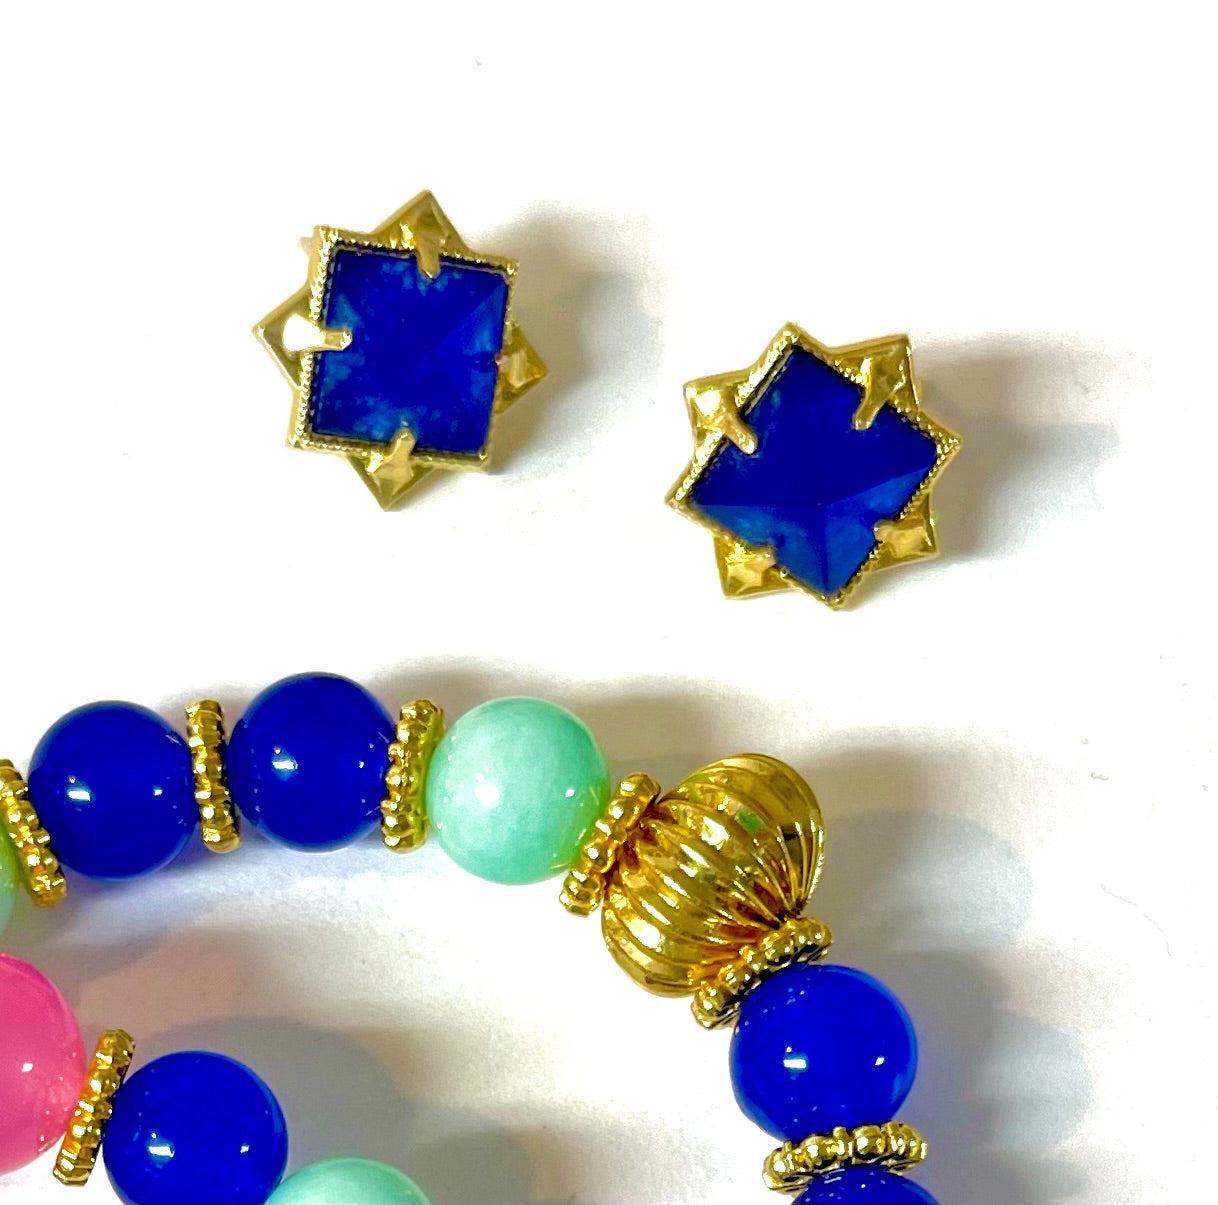 Pink Quartz, Blue Chalcedony, Amazonite Gemstone Bracelets and Earrings Set